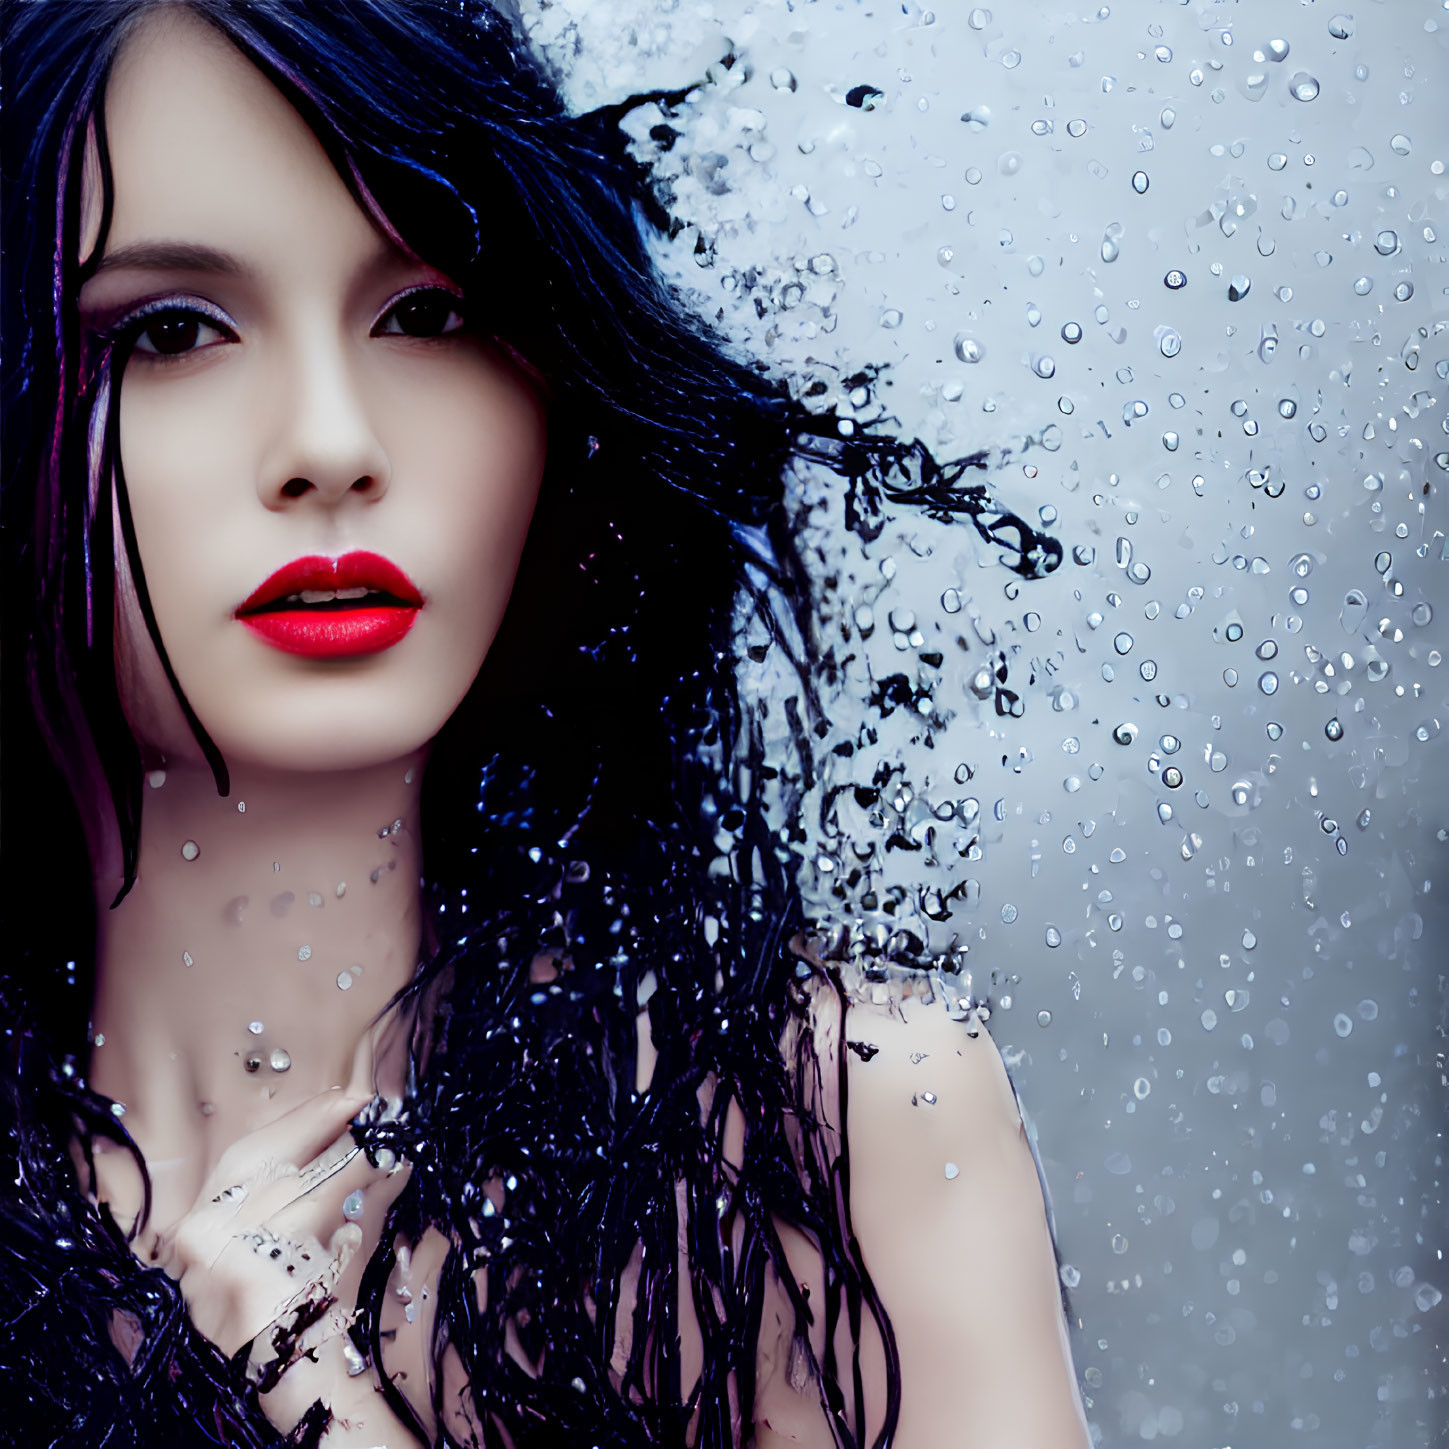 Striking red lipstick woman with wet black hair gazing through raindrop-speckled glass pane